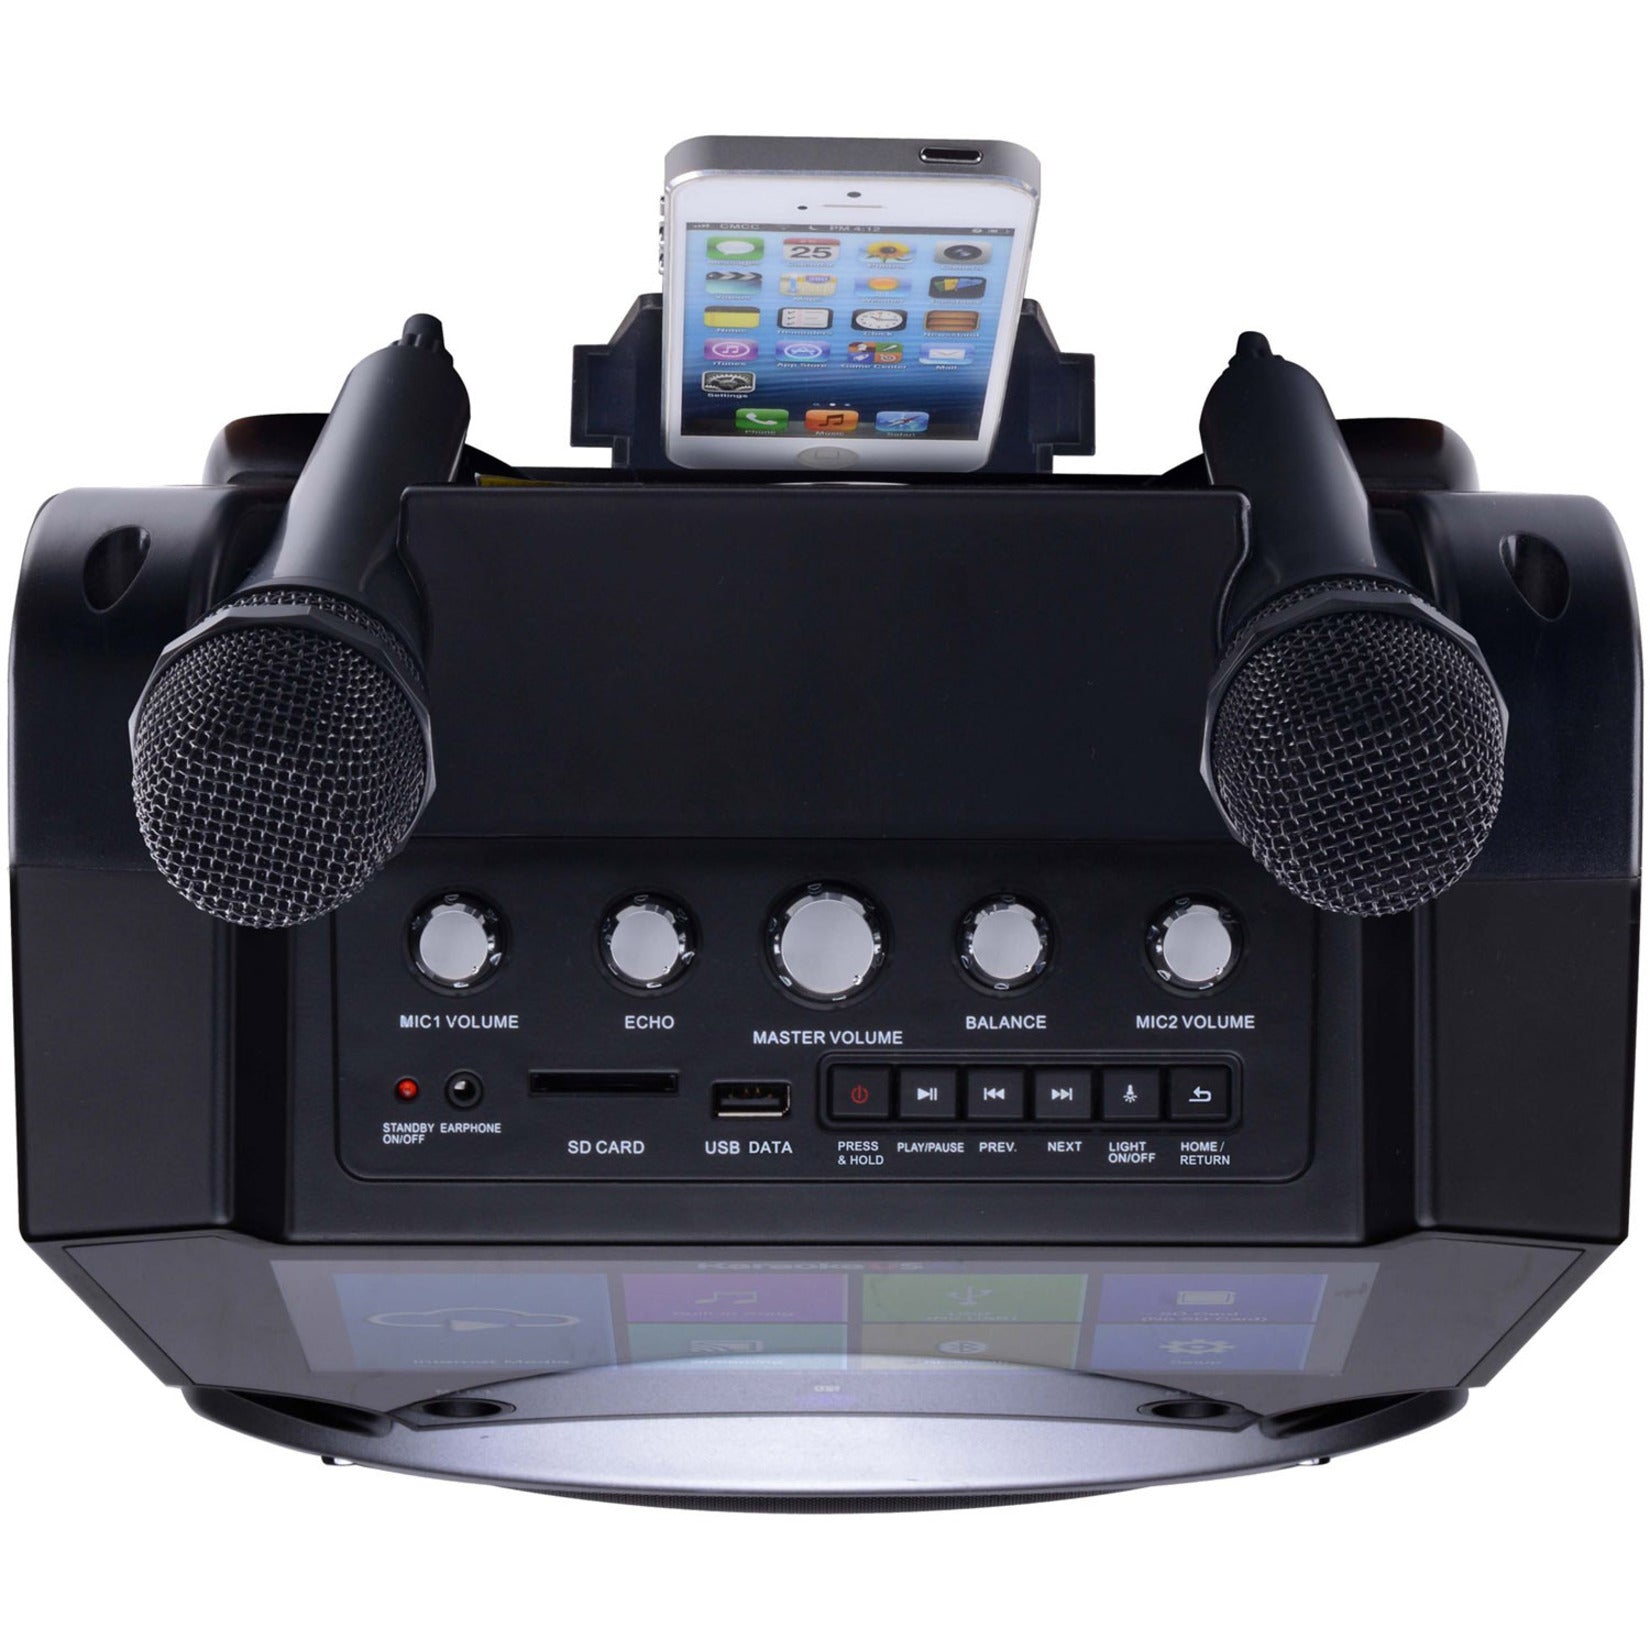 Karaoke USA WK849 Karaoke System, Universal Cradle, 2 Microphones, 120V Power Adaptor, Remote Control